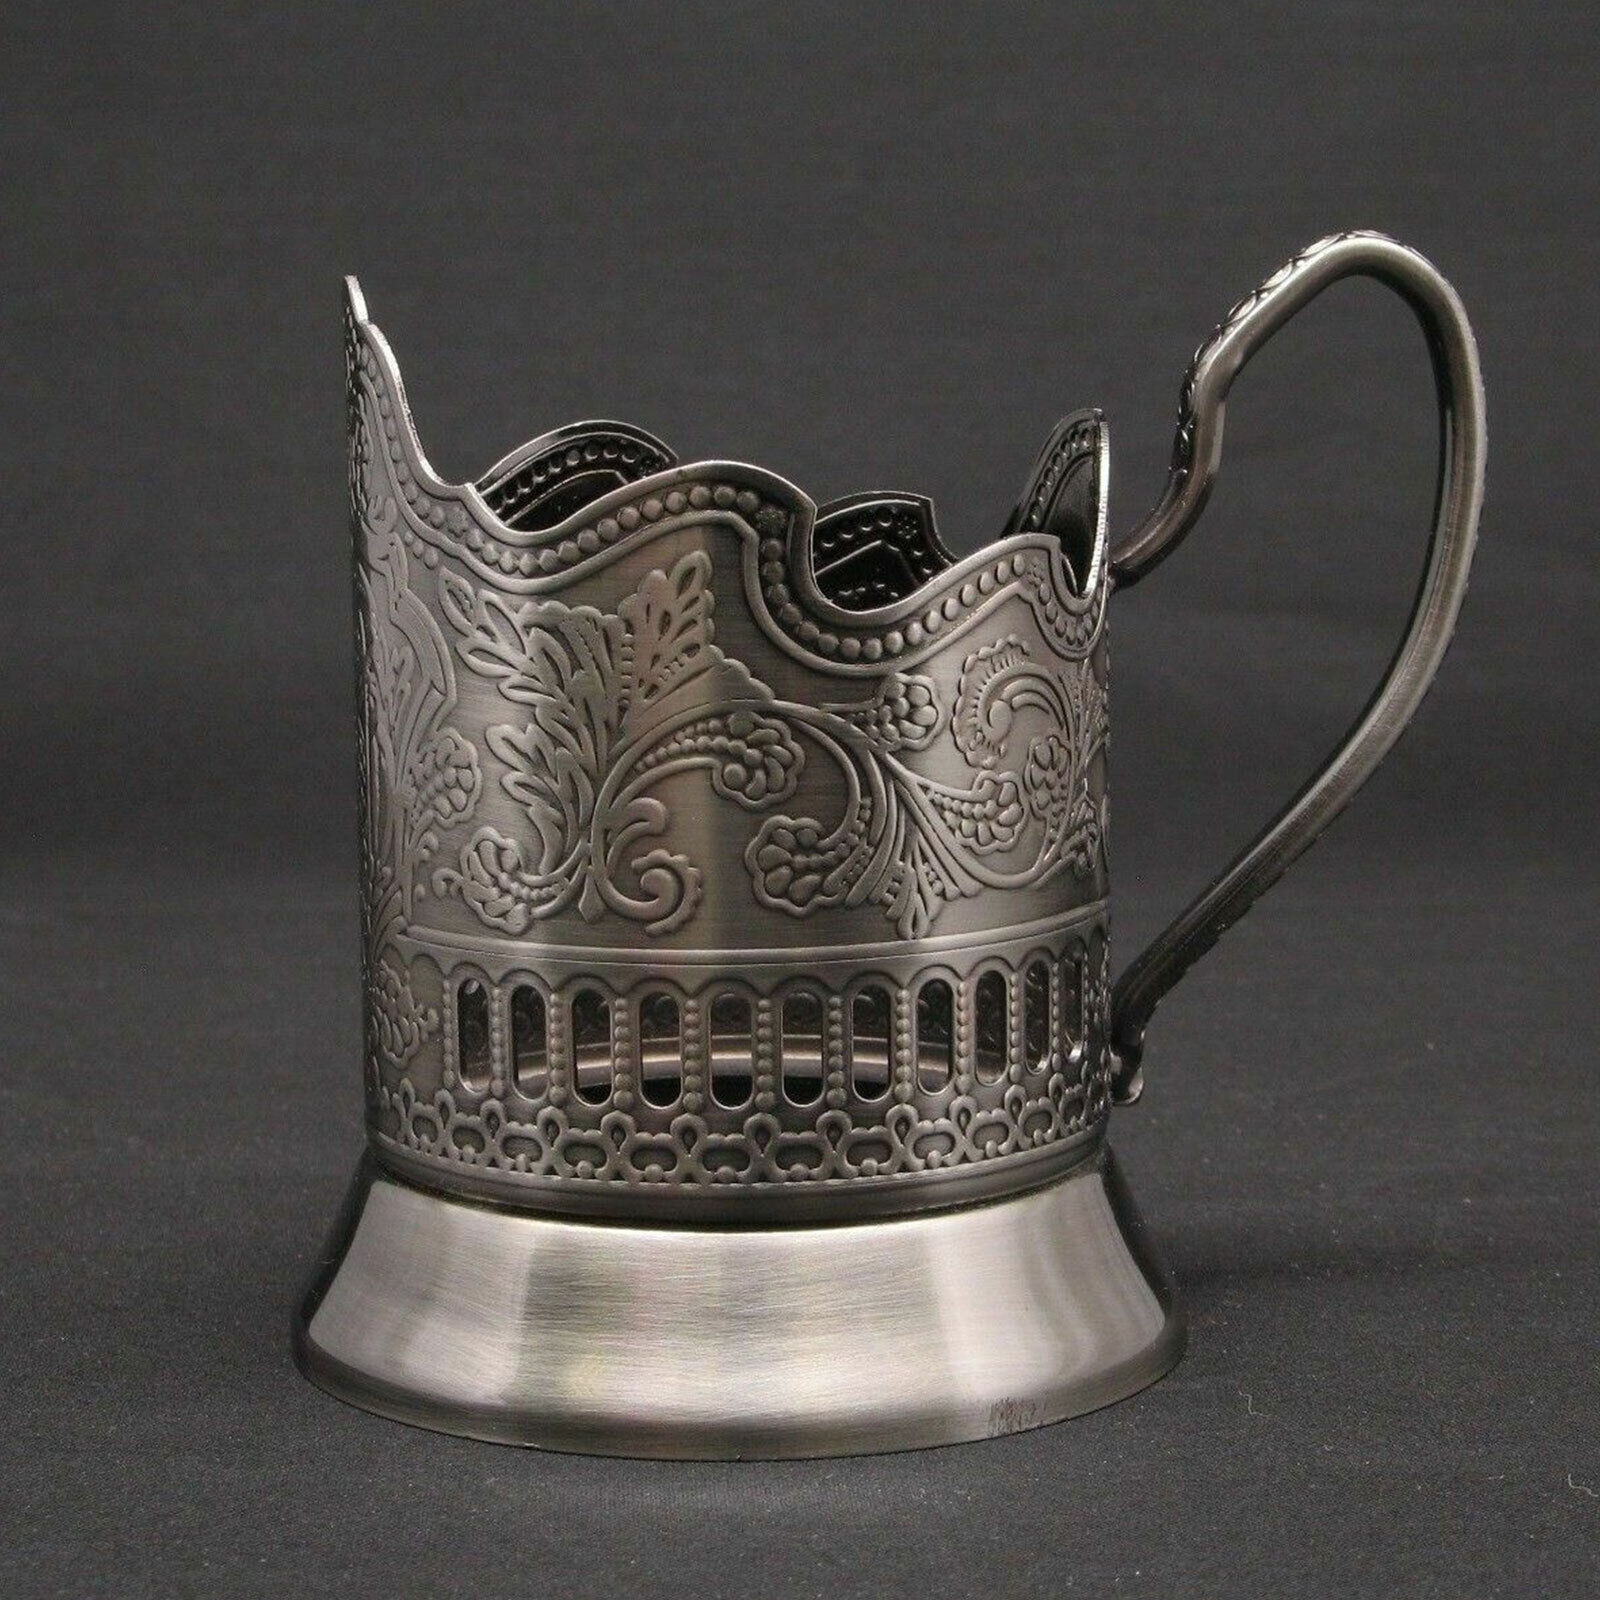 Russian Tea Glass Holder Podstakannik - Soviet / USSR Stainless Steel Drink ware